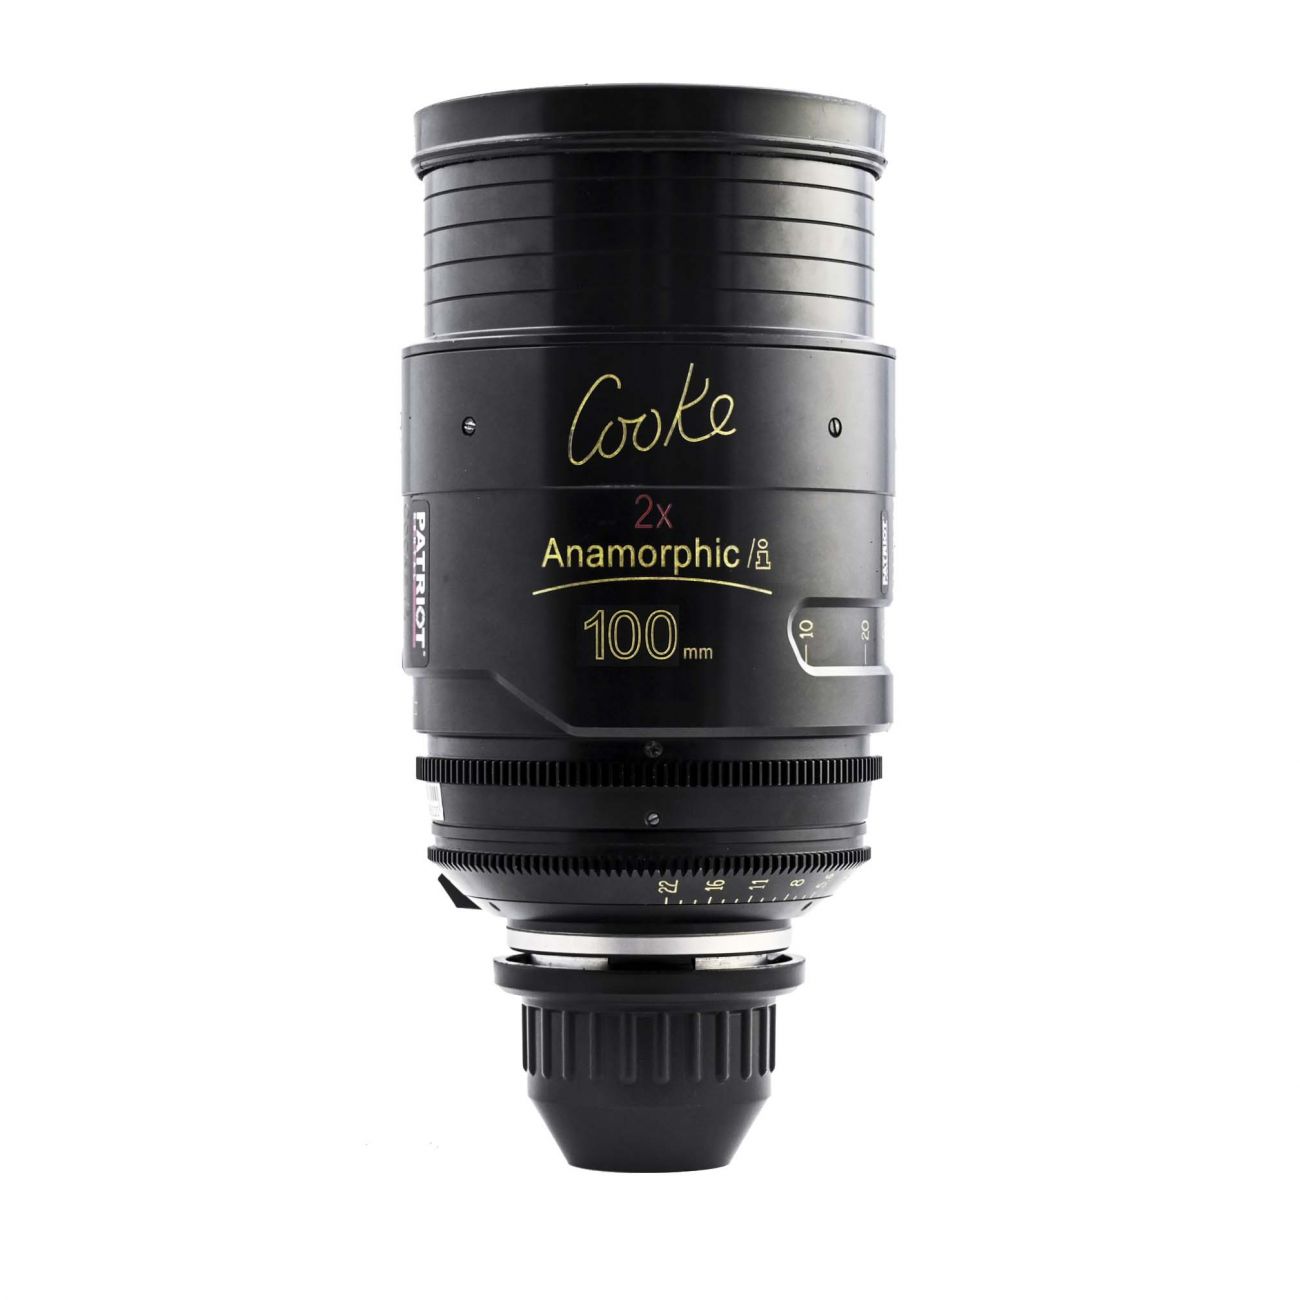 100mm COOKE ANAMORPHIC/I 2x lens T2.3